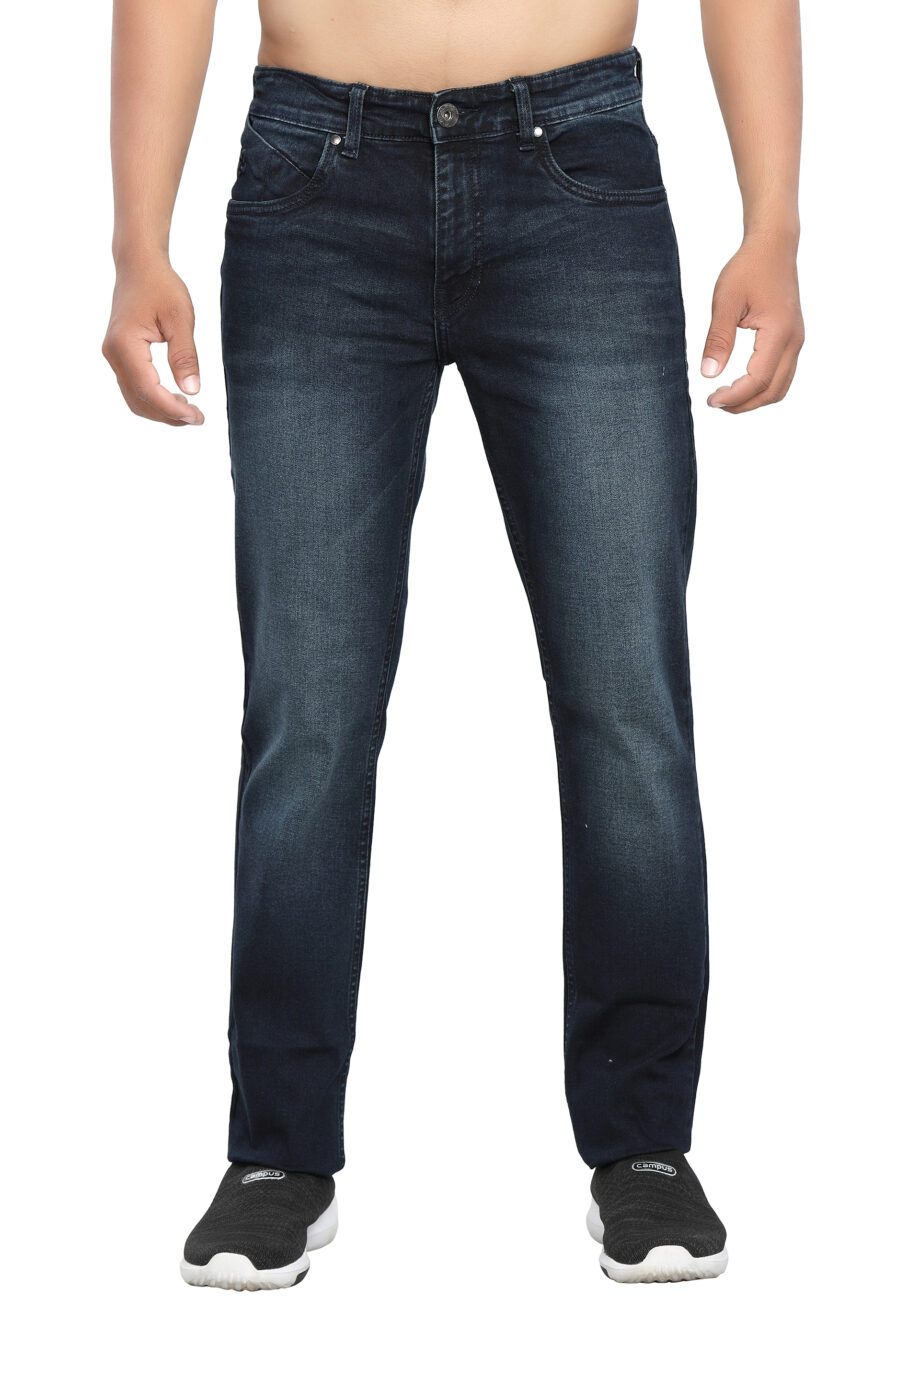 Stretchable Dark blue jeans for men